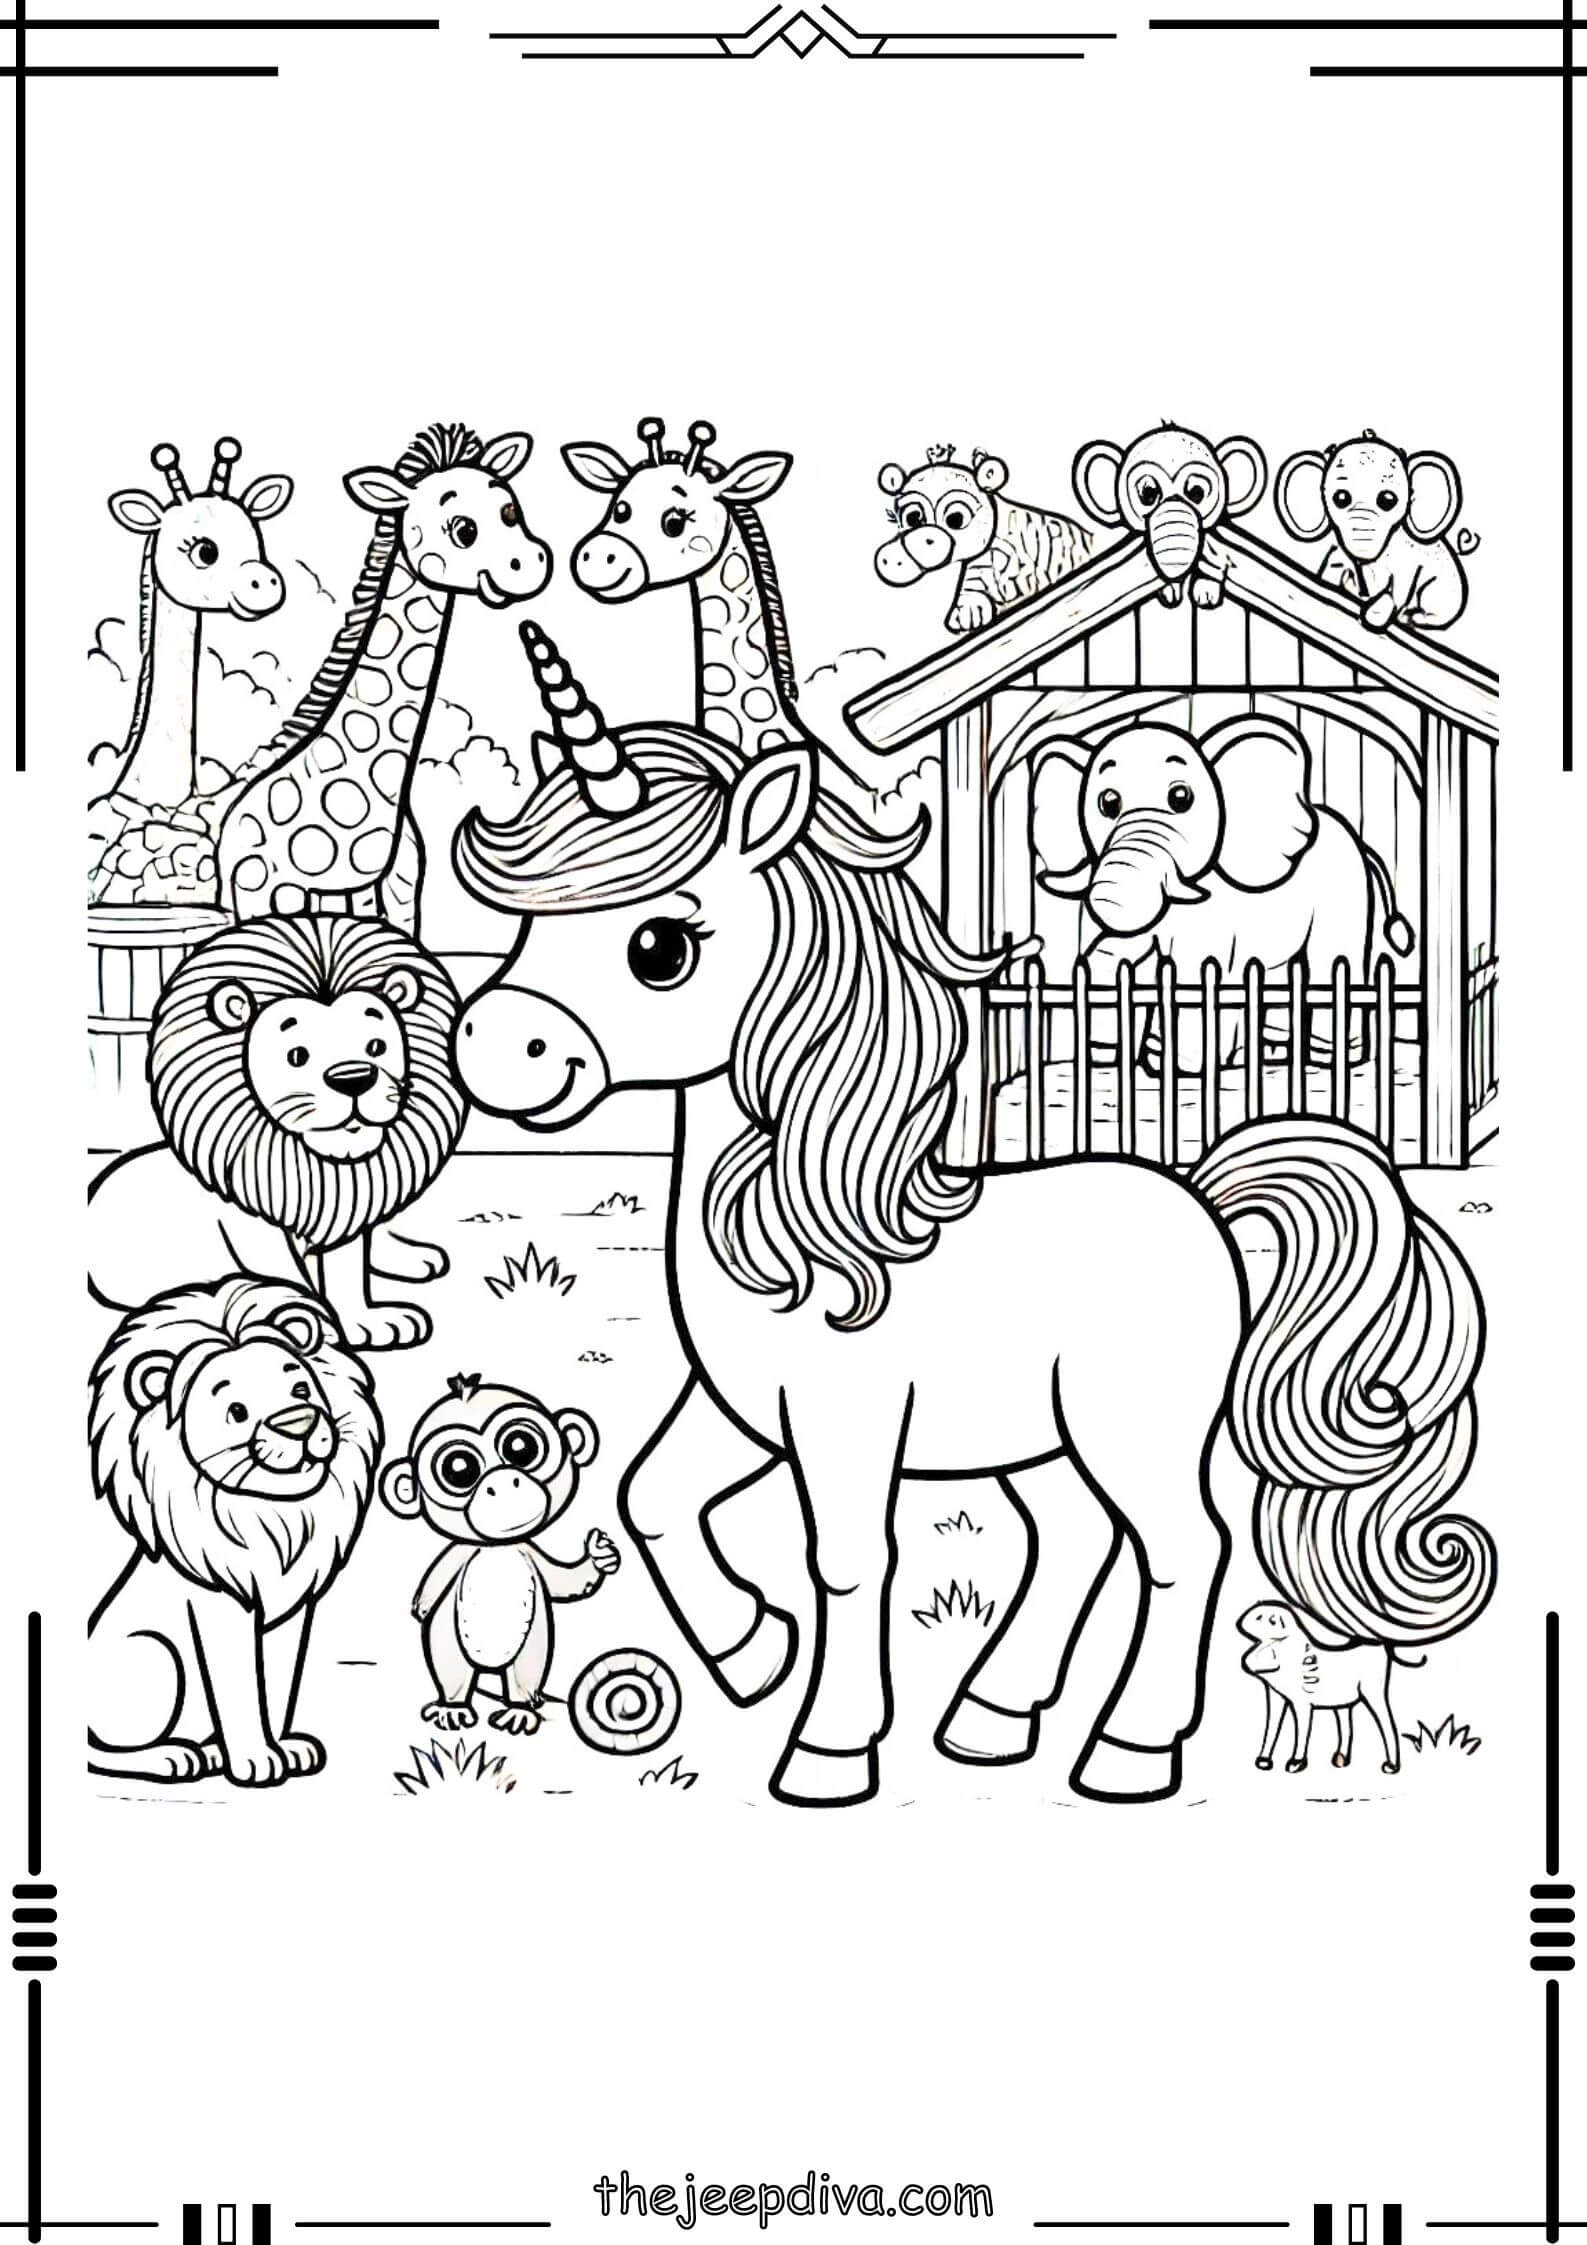 unicorn-coloring-page-hard-16